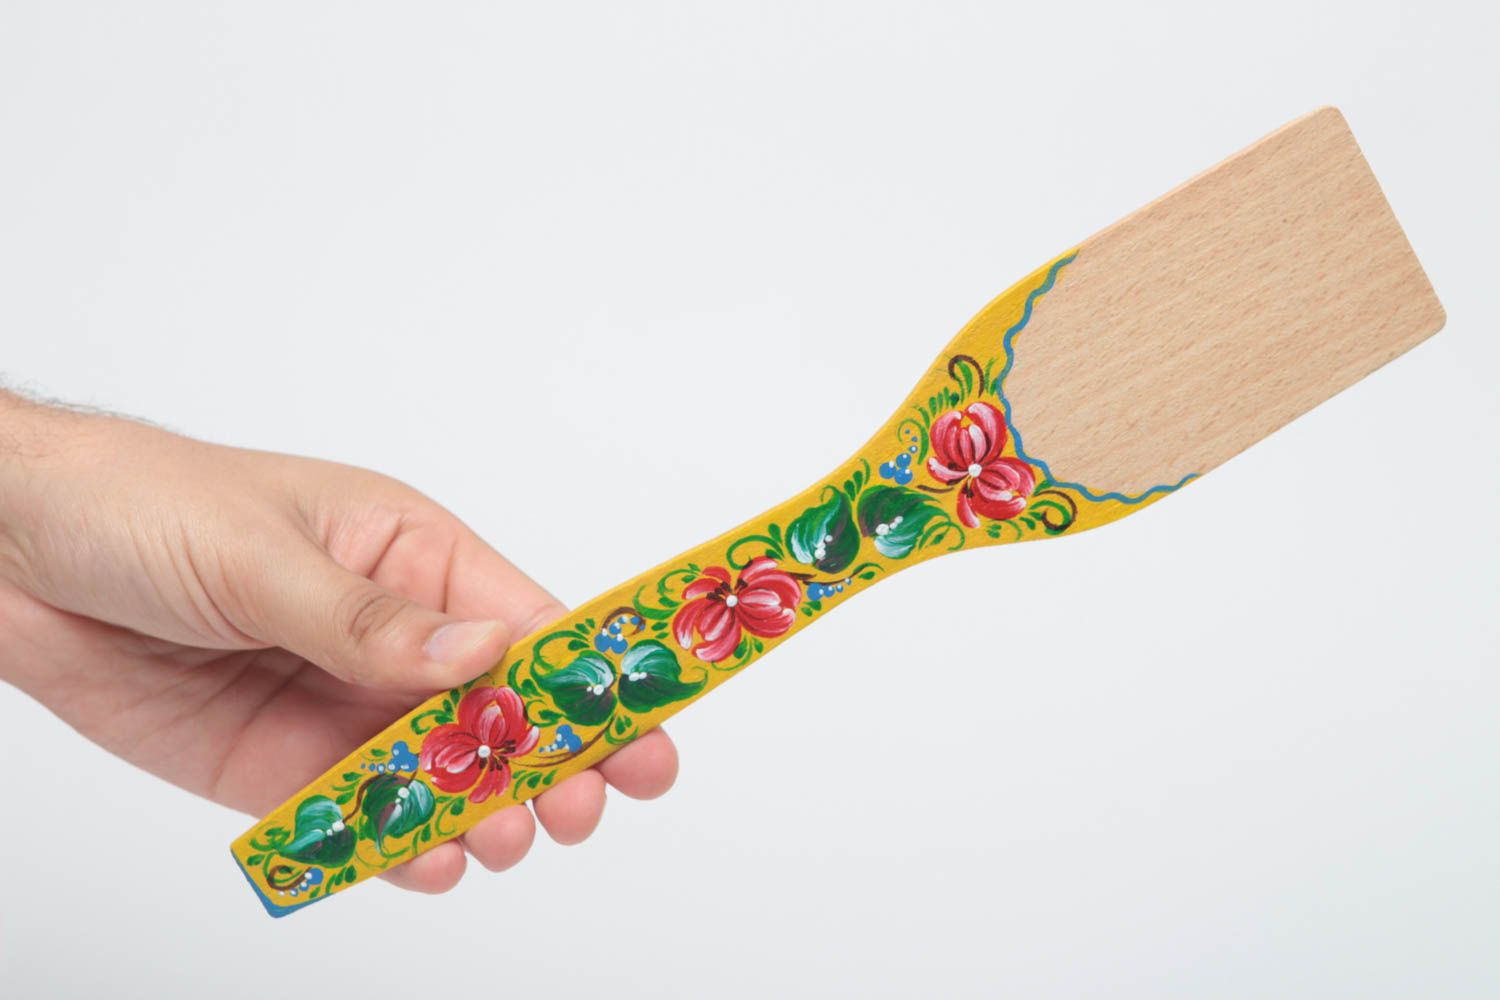 Beautiful homemade painted wooden spatula decorative kitchen utensils gift ideas photo 5